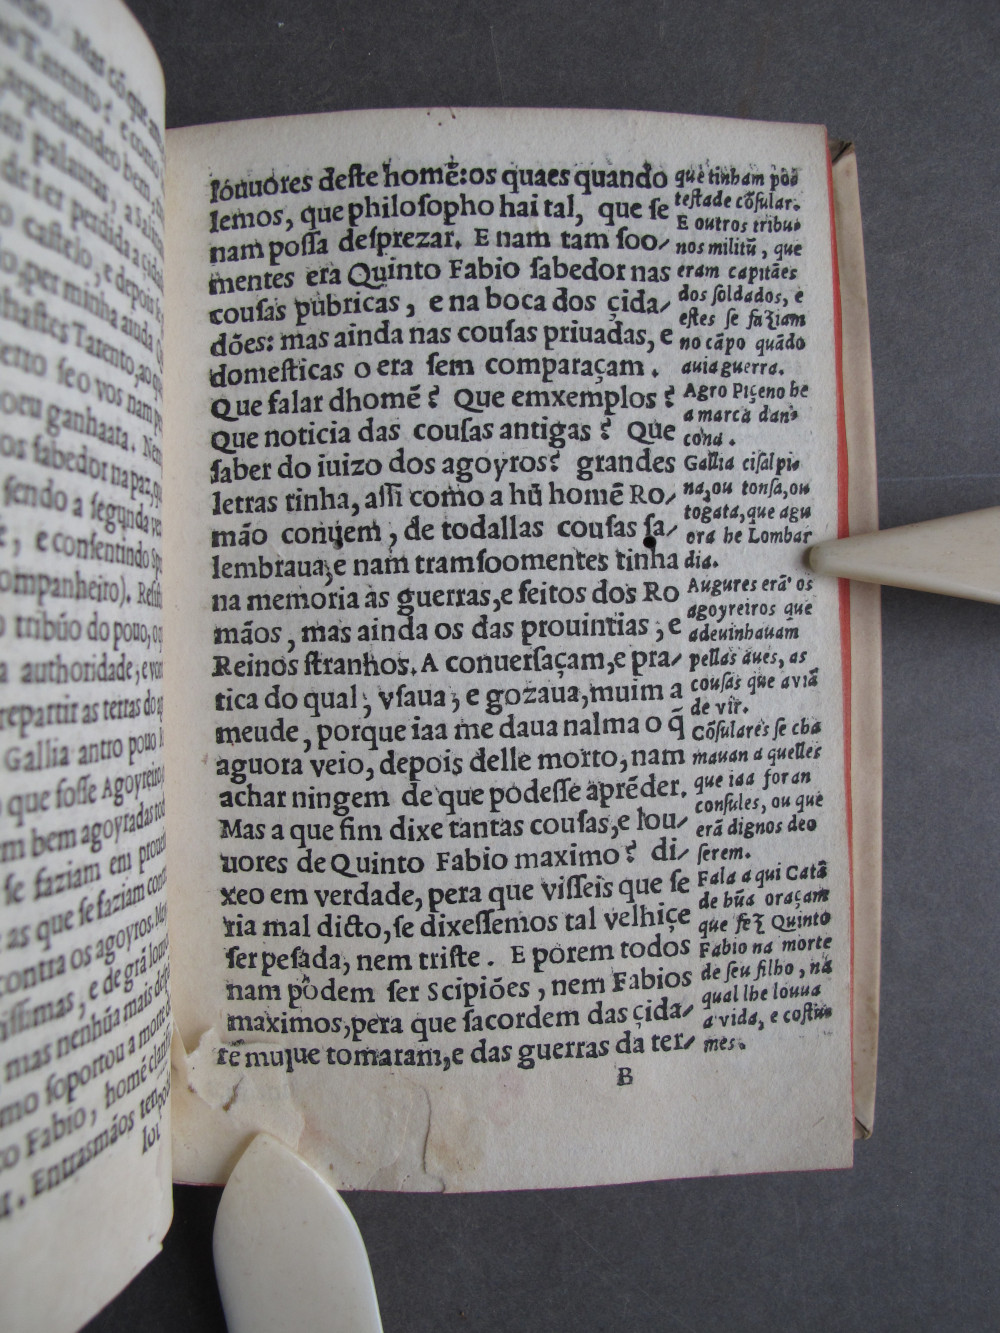 Folio B1 recto